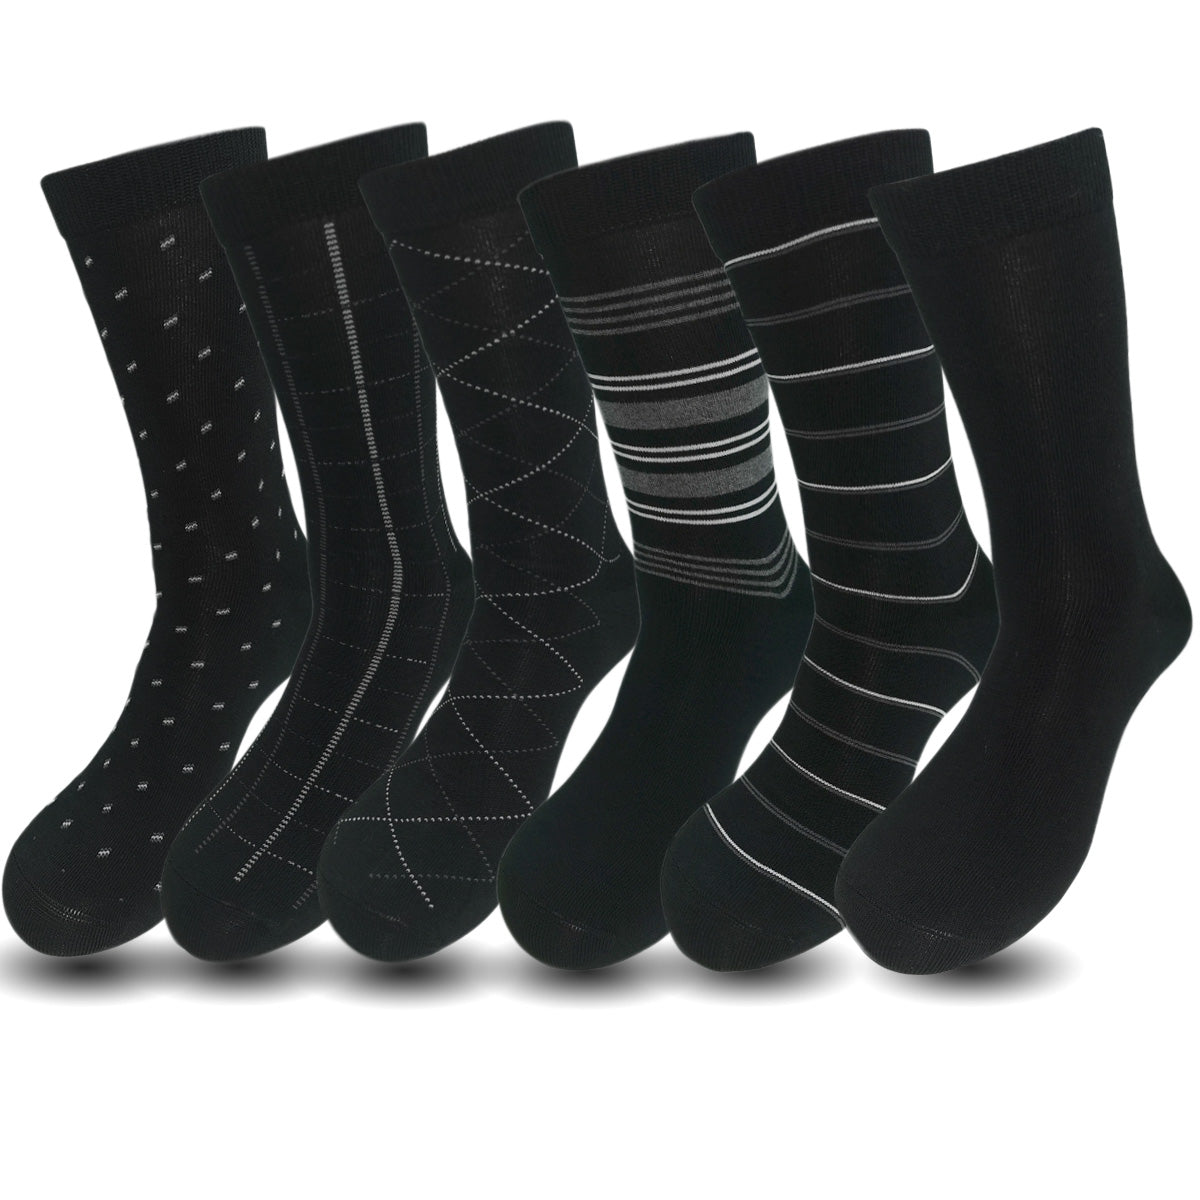 Lavencious Premium Men's Soft and Comfort Bamboo Fiber Crew Dress Socks for Men Shoe Size 7-13, 6 Pairs (Multi Patterns)